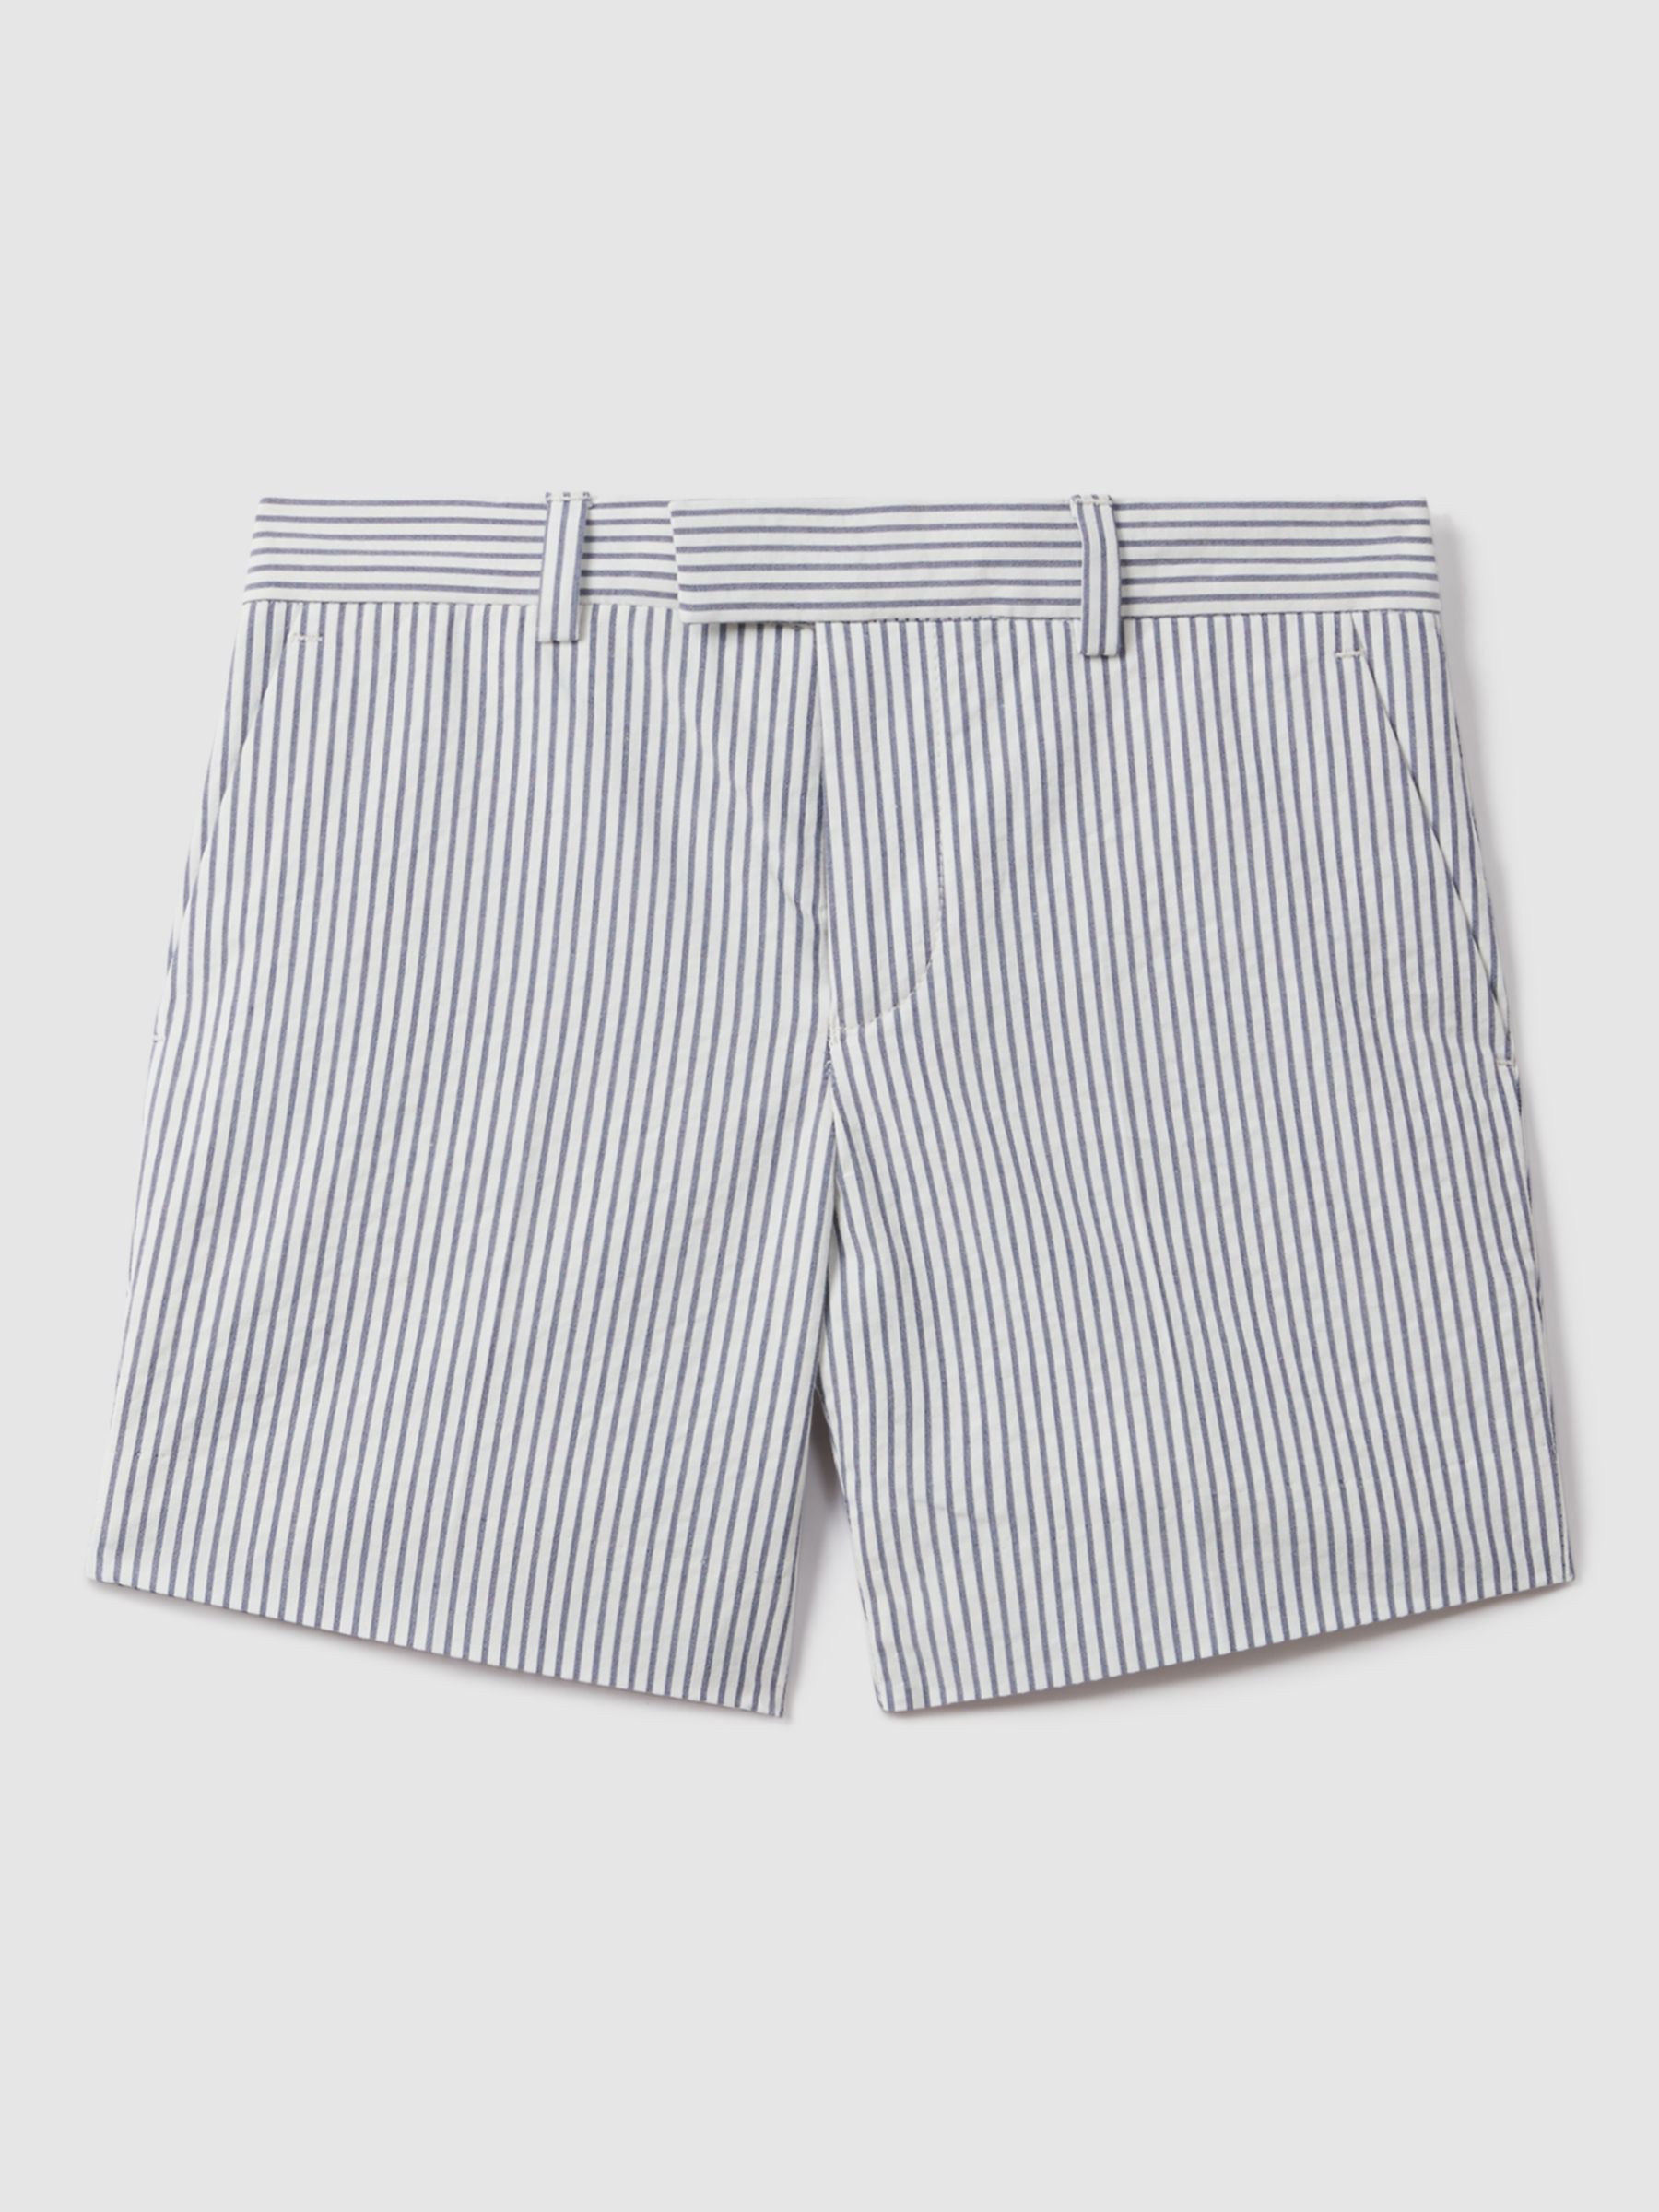 Reiss Kids' Barr Stripe Cotton Chino Shorts, Soft Blue, 3-4 years